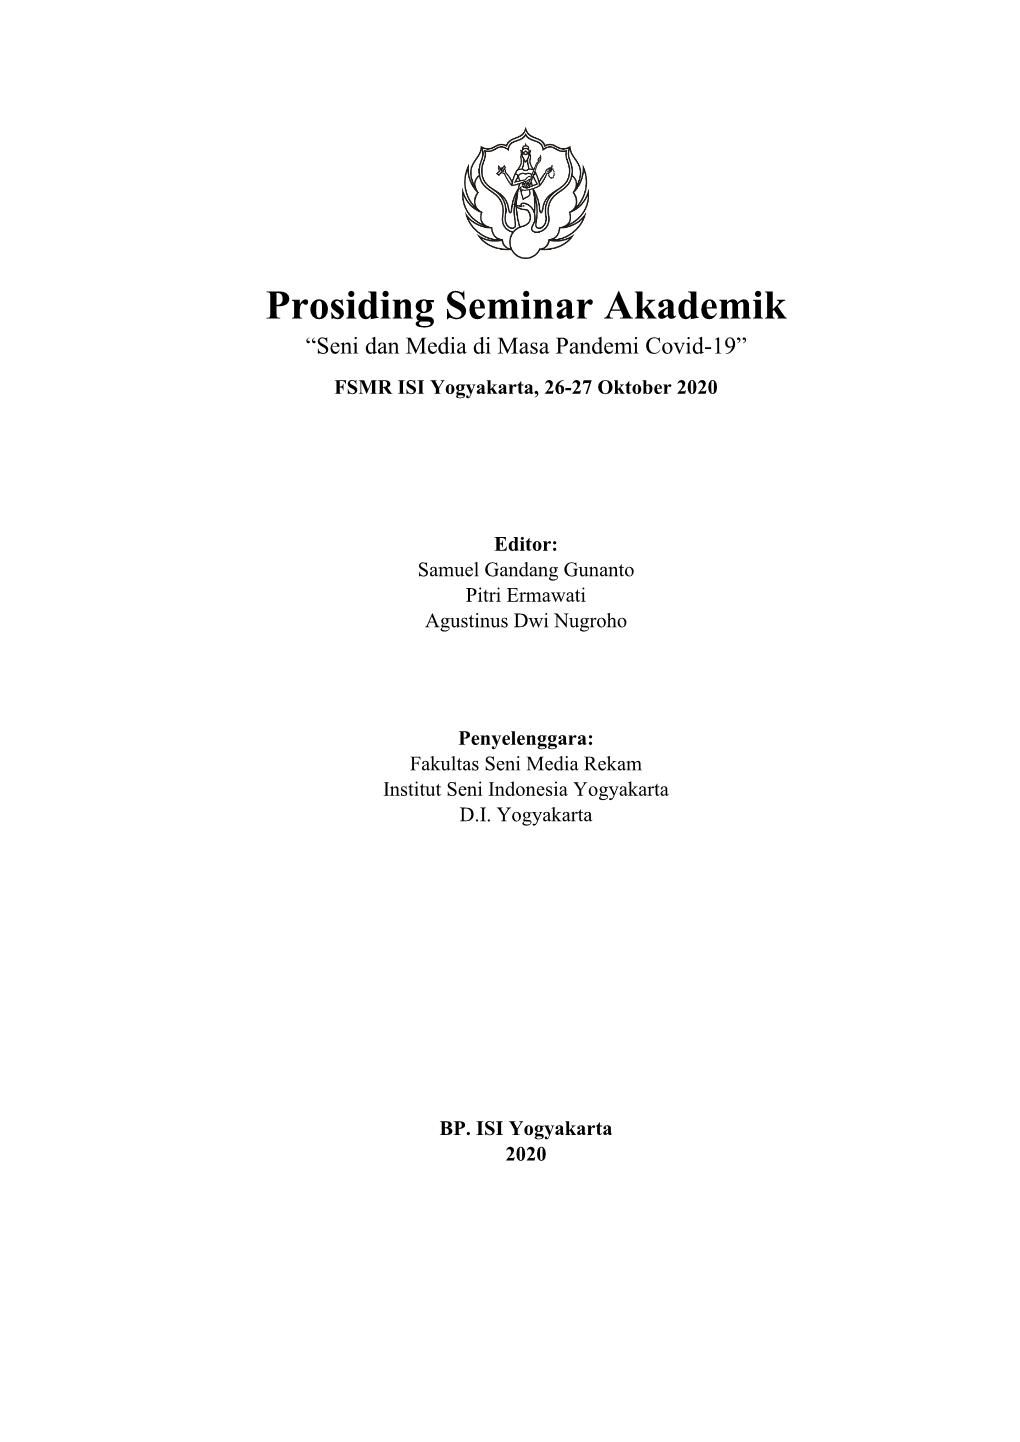 Prosiding Seminar Akademik “Seni Dan Media Di Masa Pandemi Covid-19” FSMR ISI Yogyakarta, 26-27 Oktober 2020